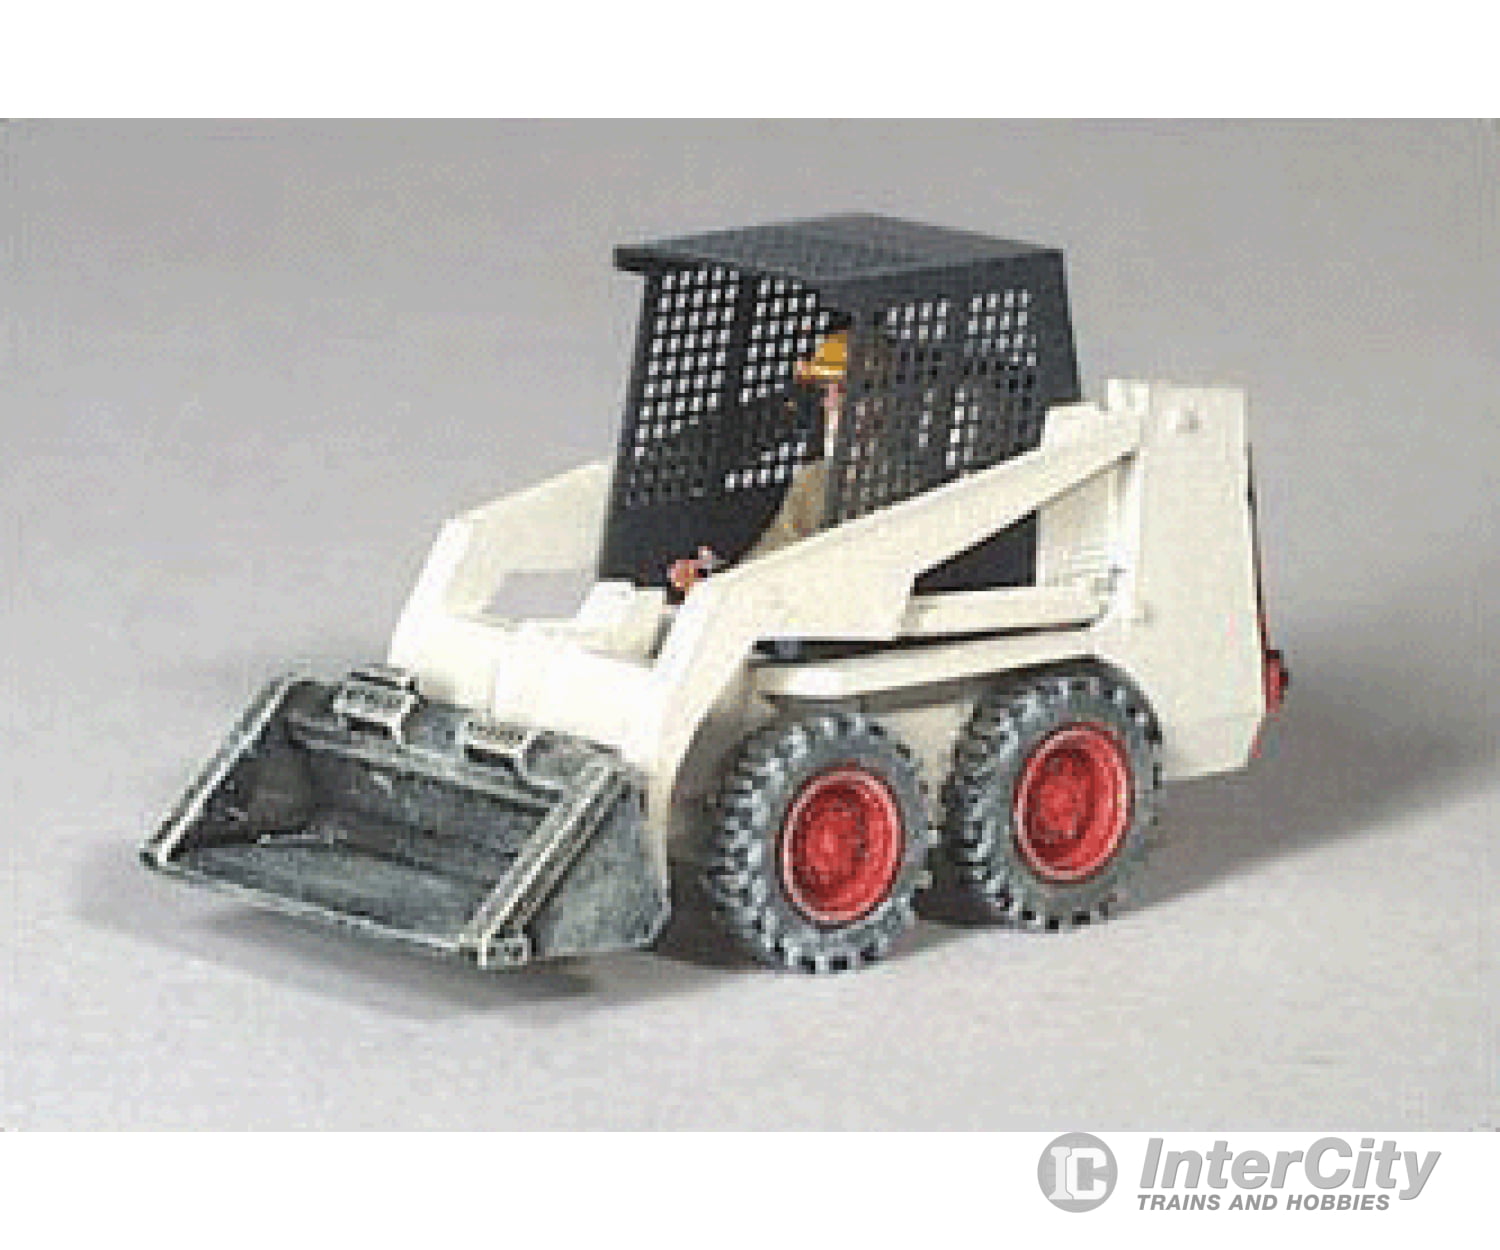 Ghq Ho 61001 Construction Equipment (Unpainted Metal Kit) -- ’Bobcat’ Skid-Steer Loader Cars &